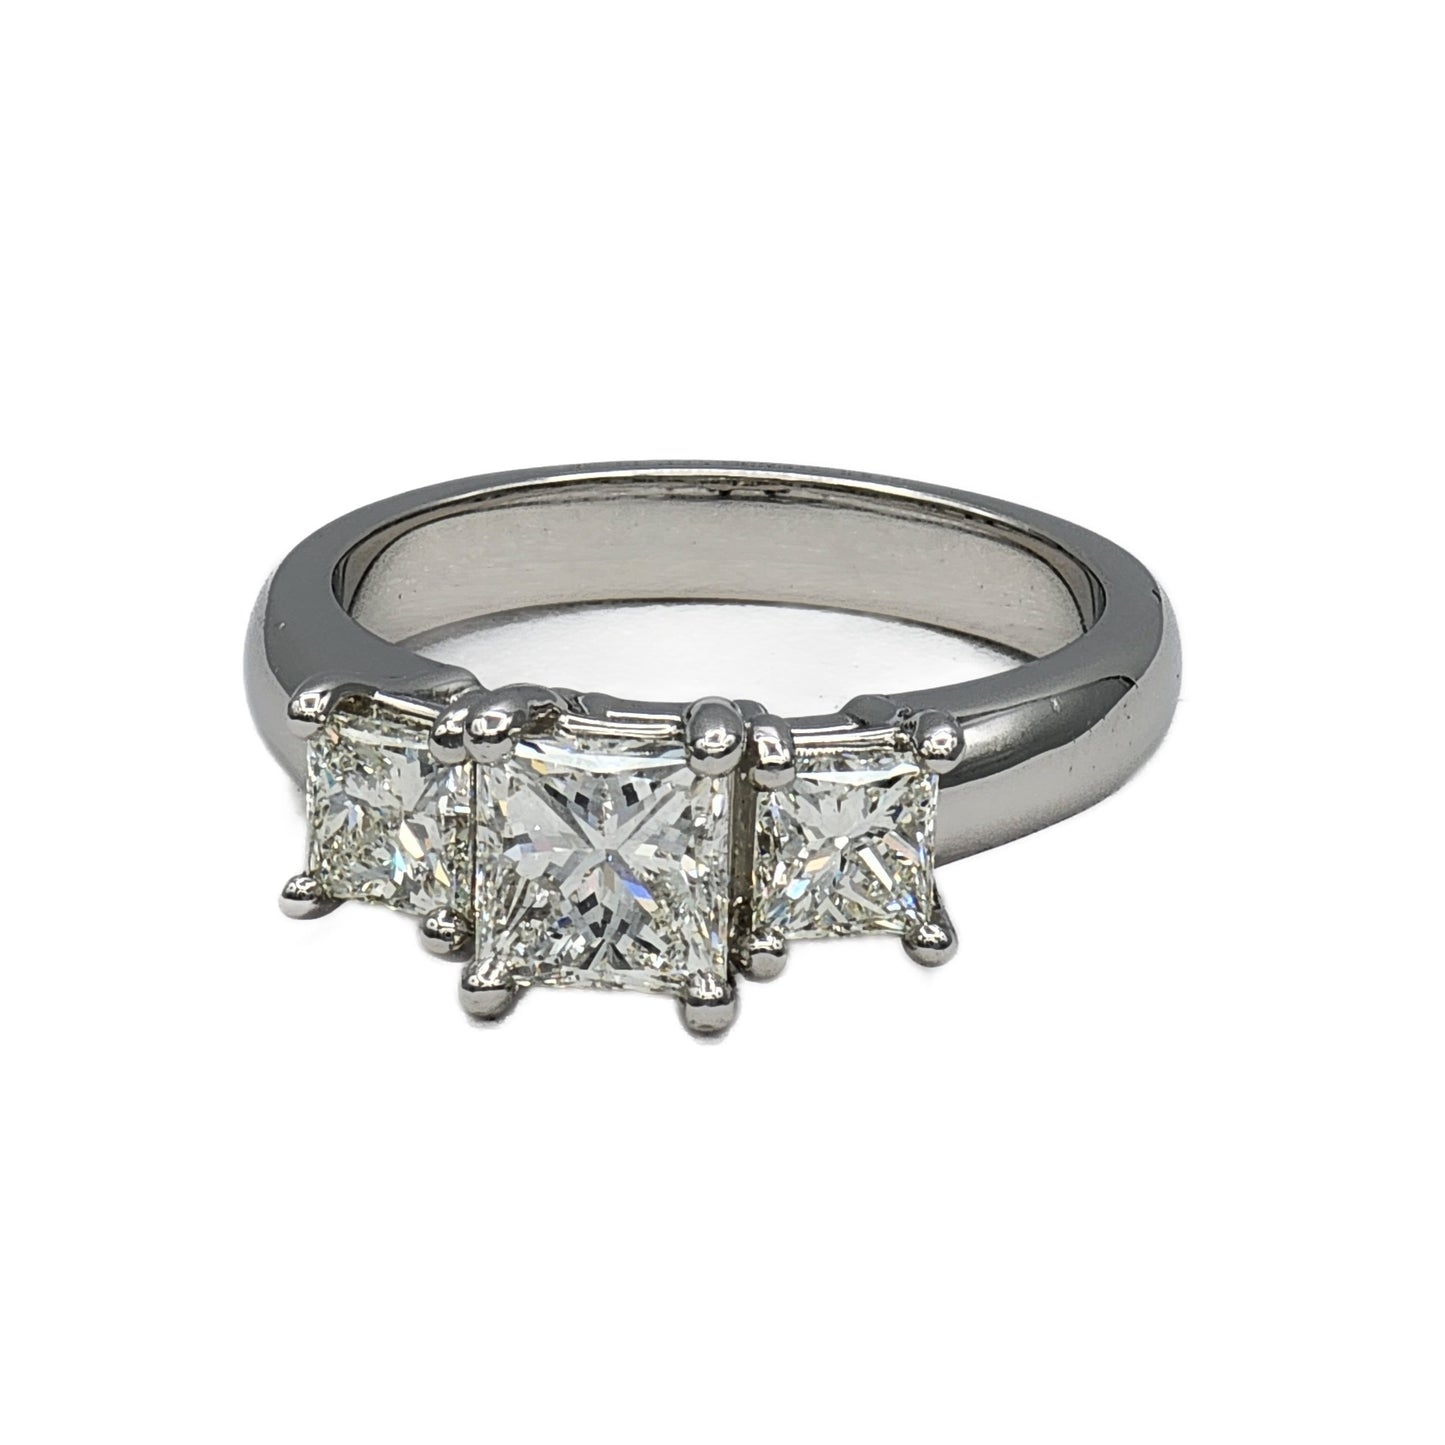 1.09 Carat I/VS2 and 2=0.92 Carat Princess Cut Diamond Ring in Platinum, GIA Report